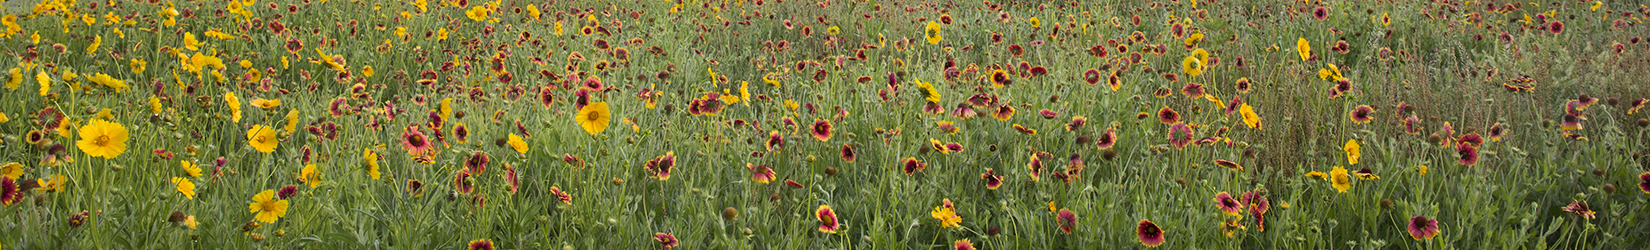 a field of wildflowers